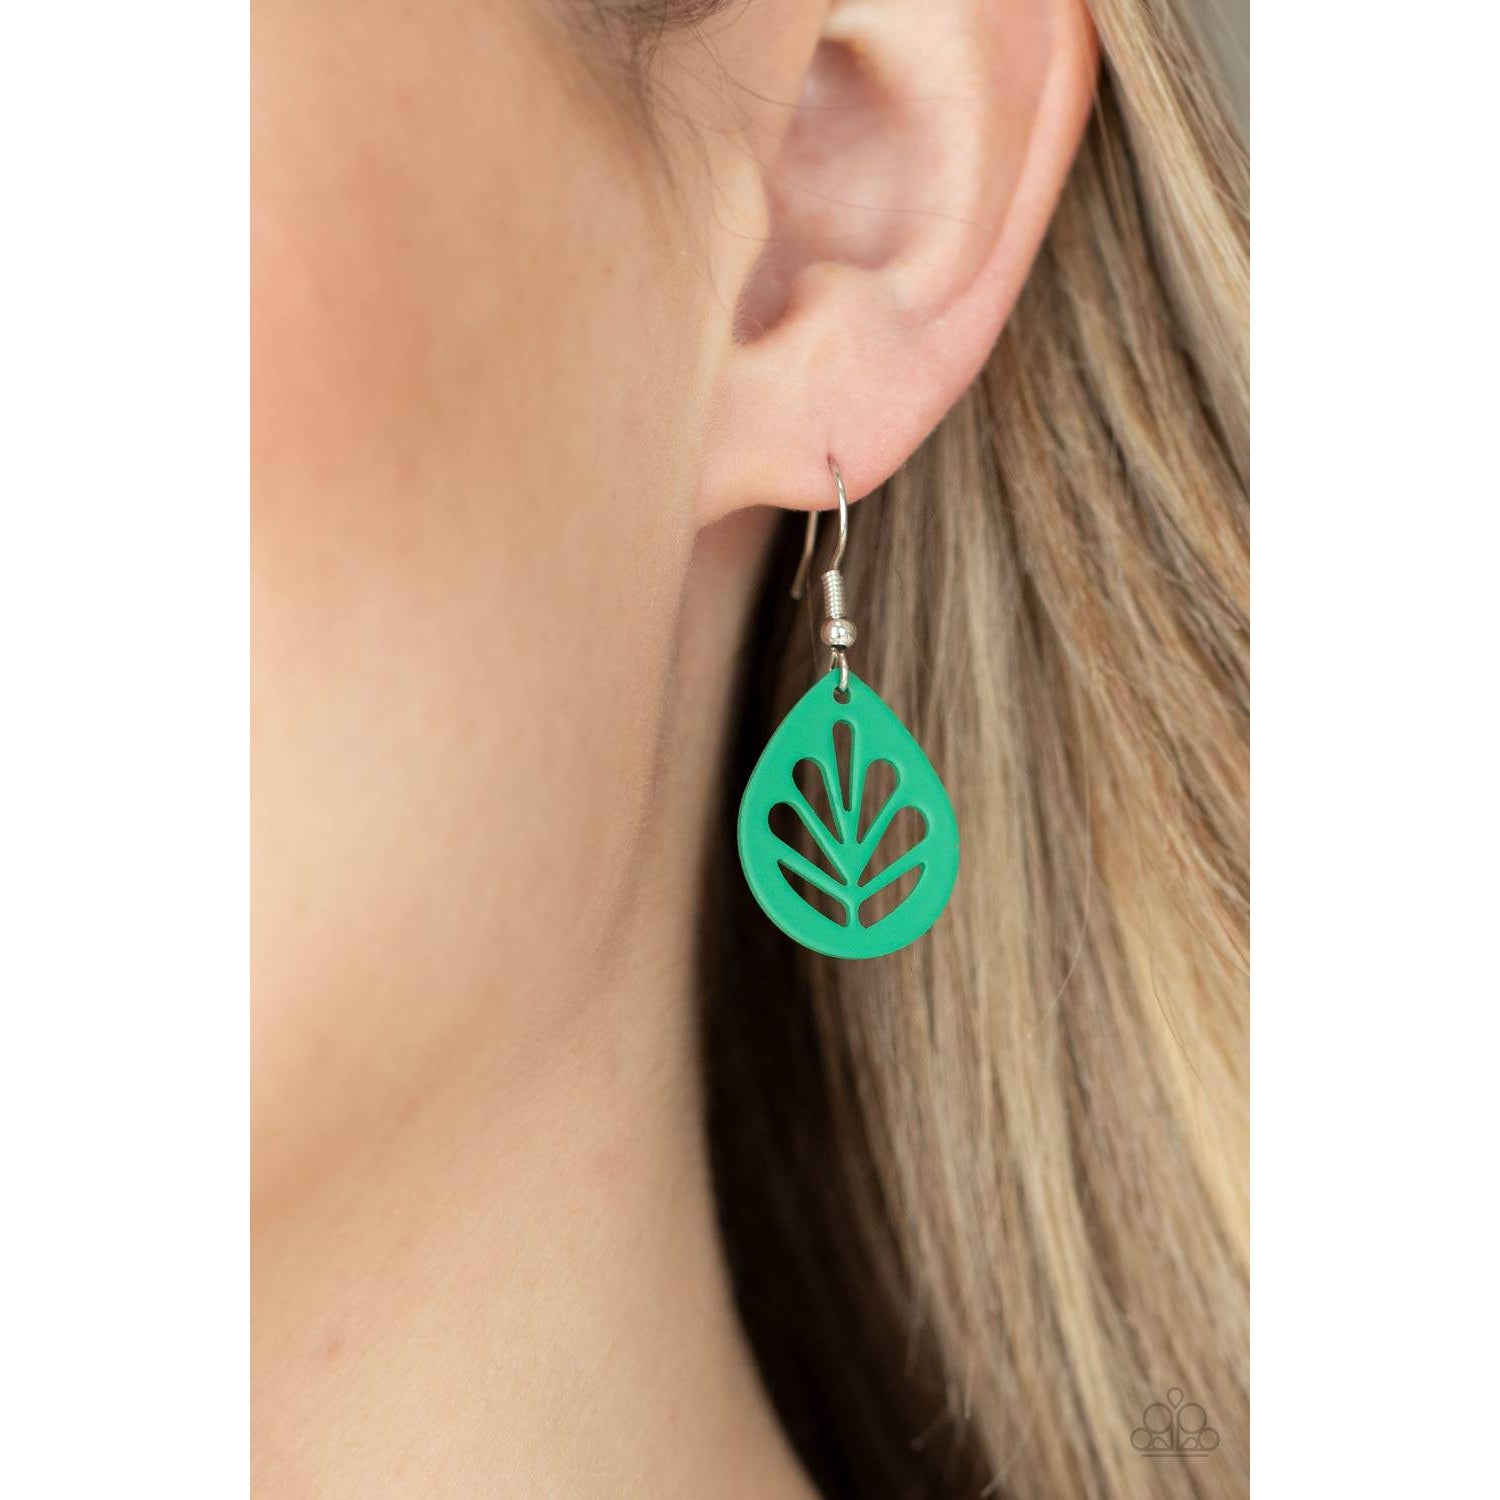 LEAF Yourself Wide Open - Green Leaf Earrings - Paparazzi Accessories - GlaMarous Titi Jewels